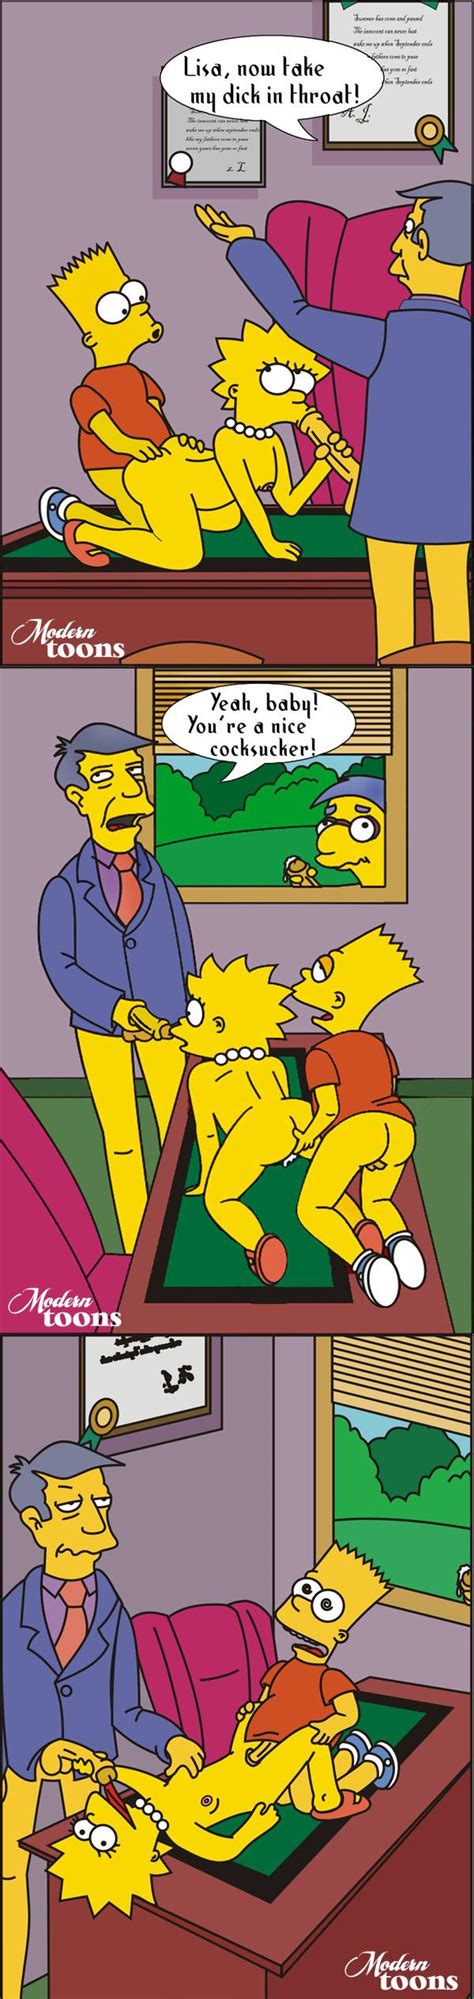 Post 499788 Bart Simpson Lisa Simpson Milhouse Van Houten Modern Toons Seymour Skinner The Simpsons